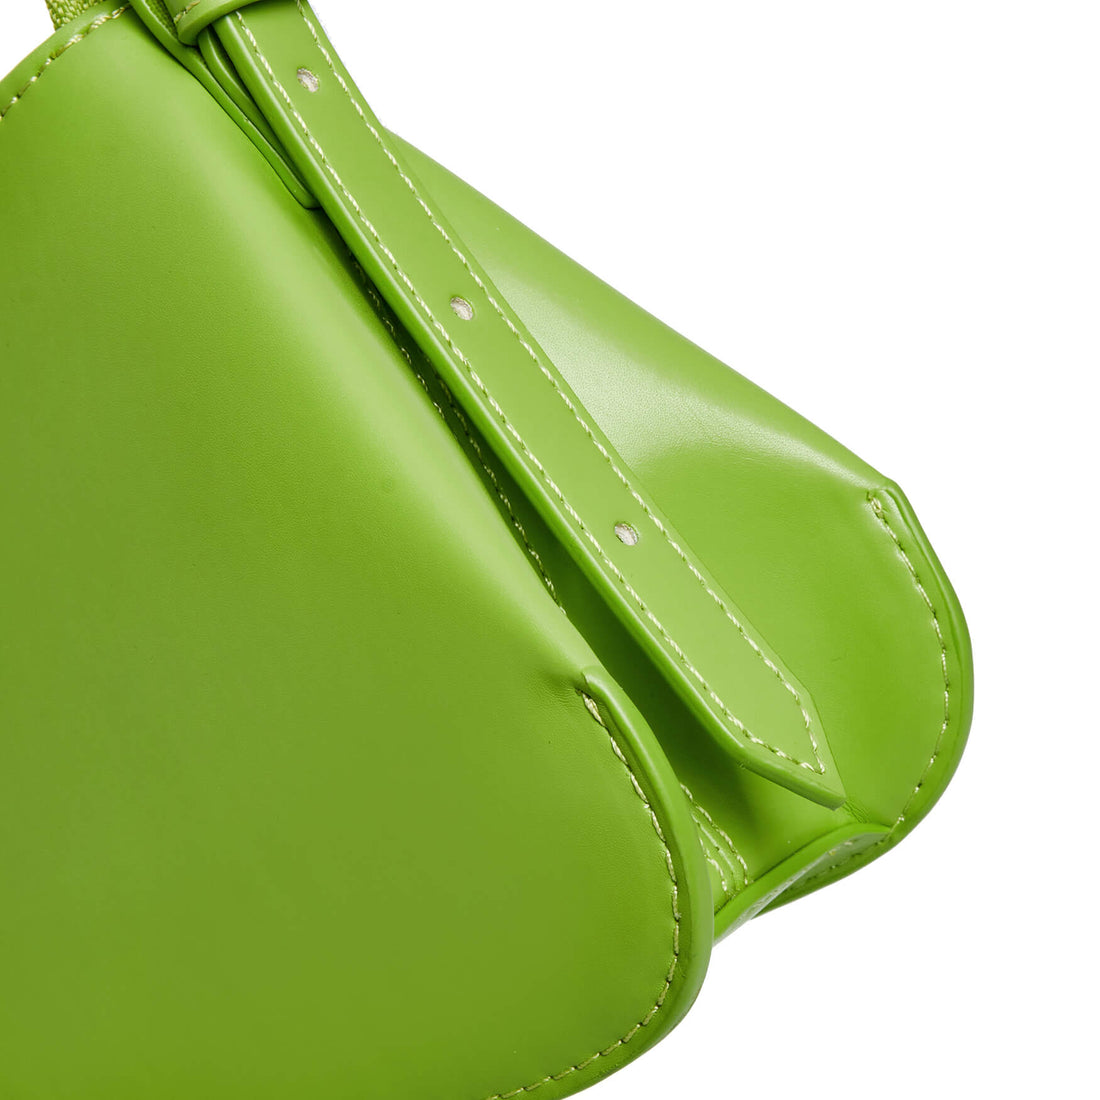 SINBONO Cruelty Free Leather Bag -  Lime Green Vegan Leather Bag